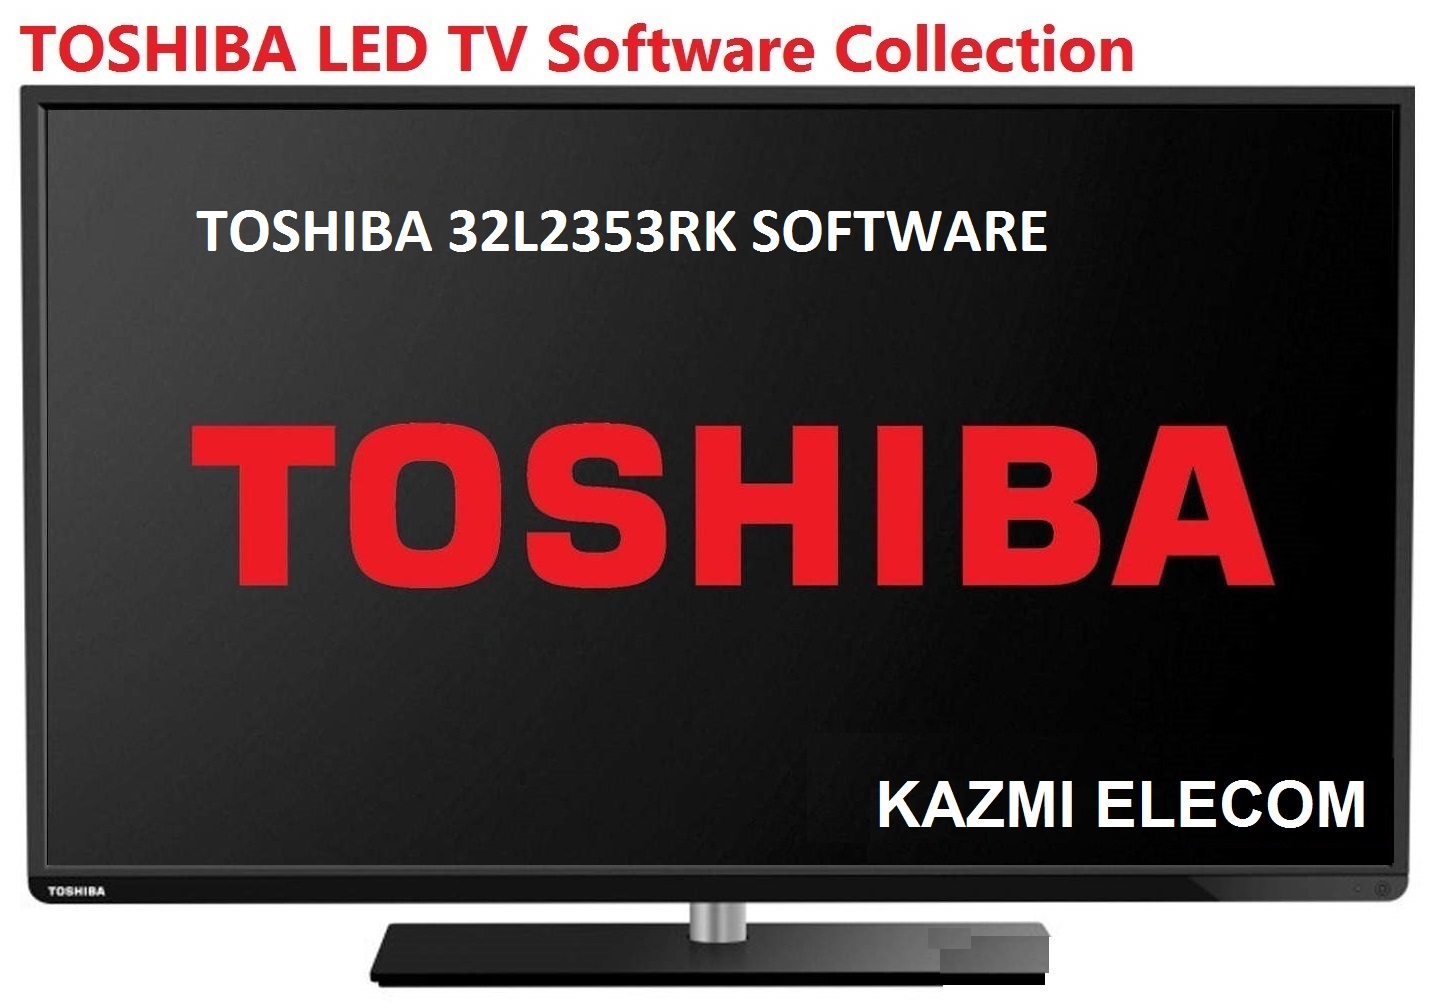 Toshiba 32L2353Rk